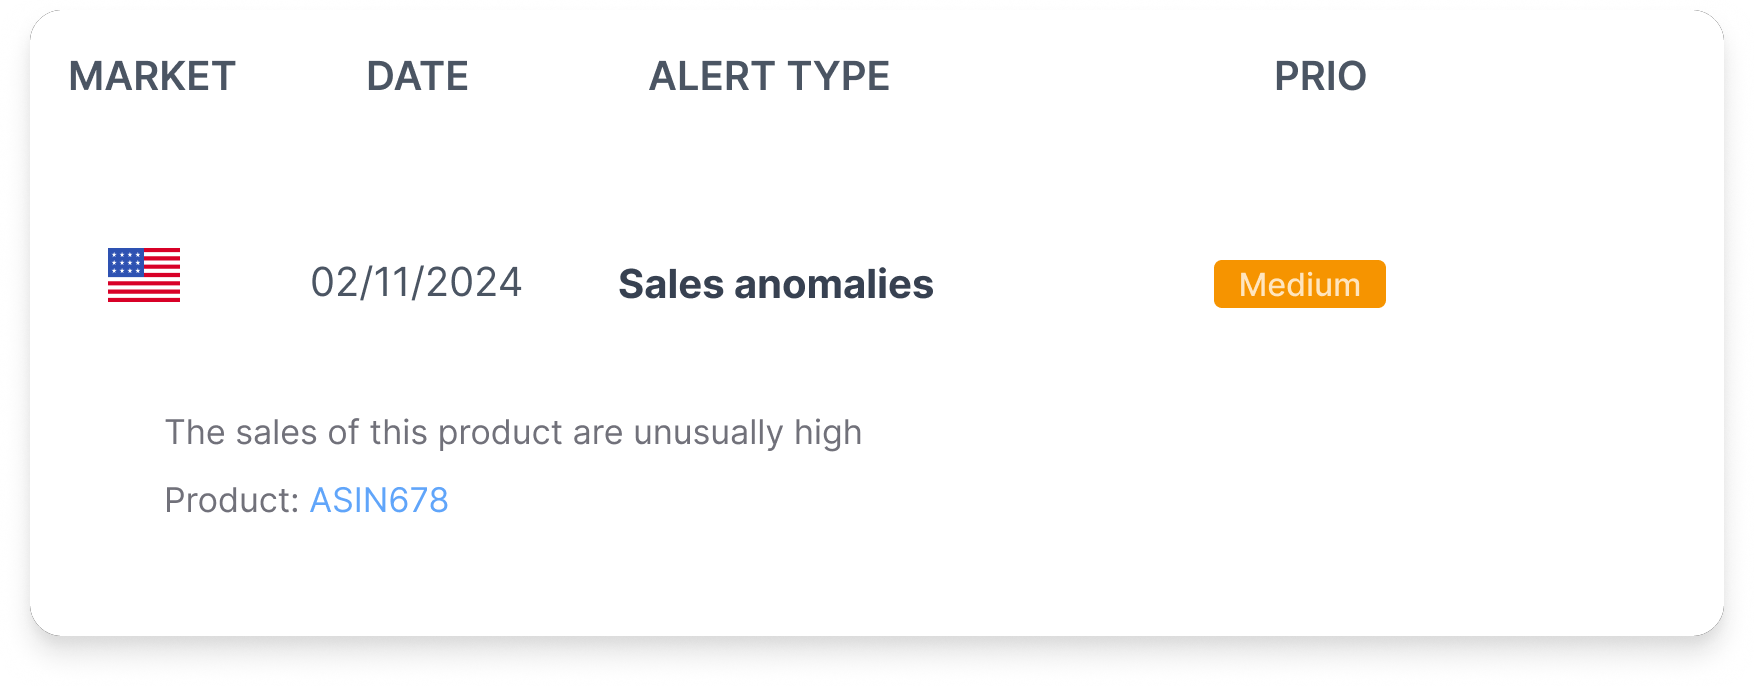 Amazon Alert Sales anomalies additional information